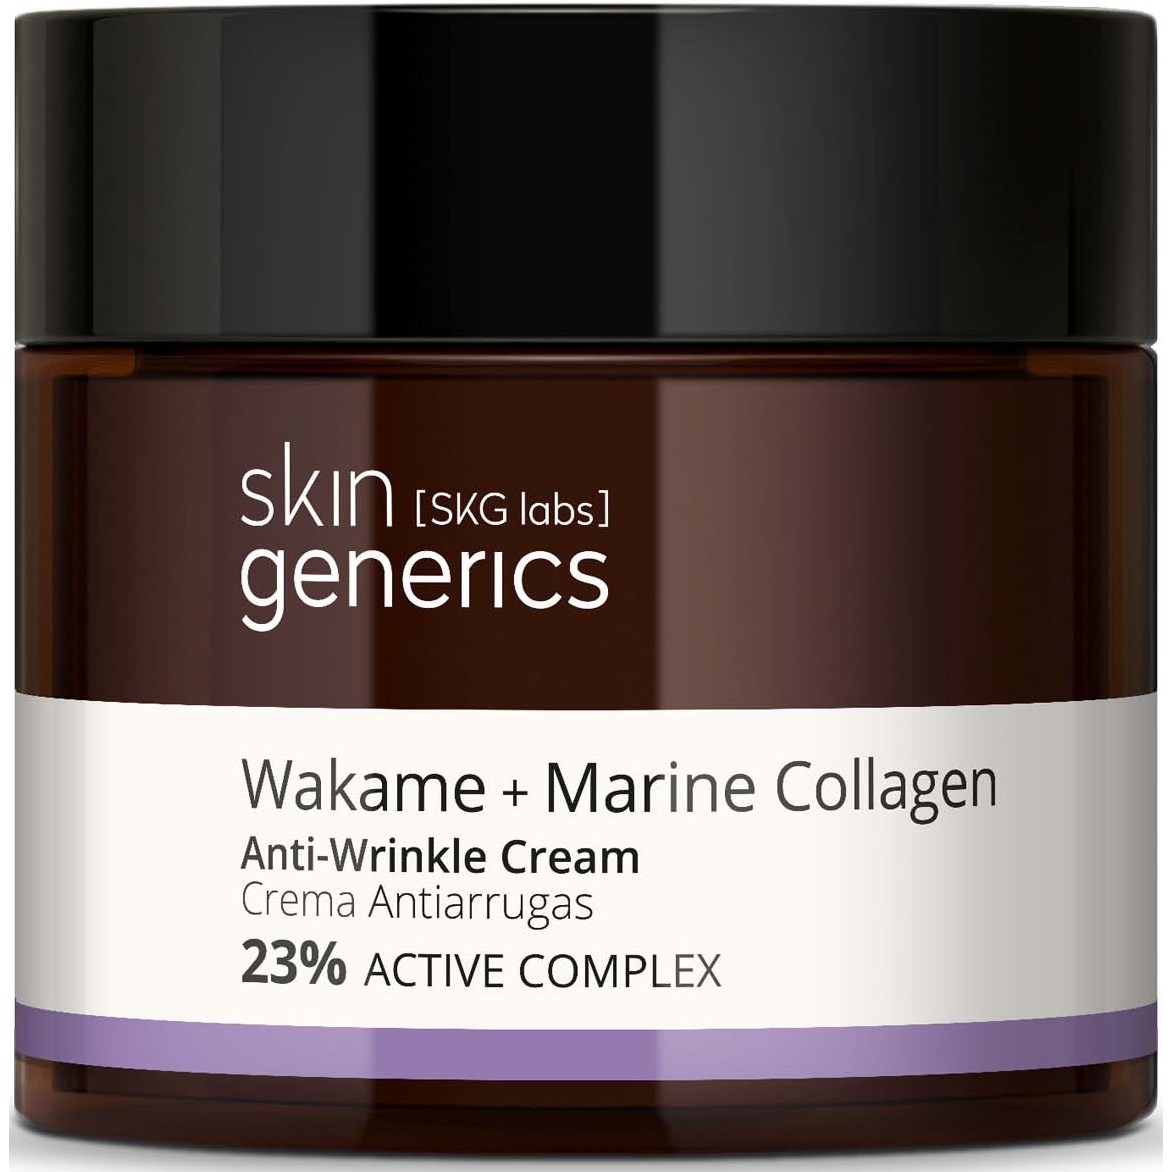 Bilde av Skin Generics Anti-wrinkle Cream Wakame 23% Active Complex 50 Ml